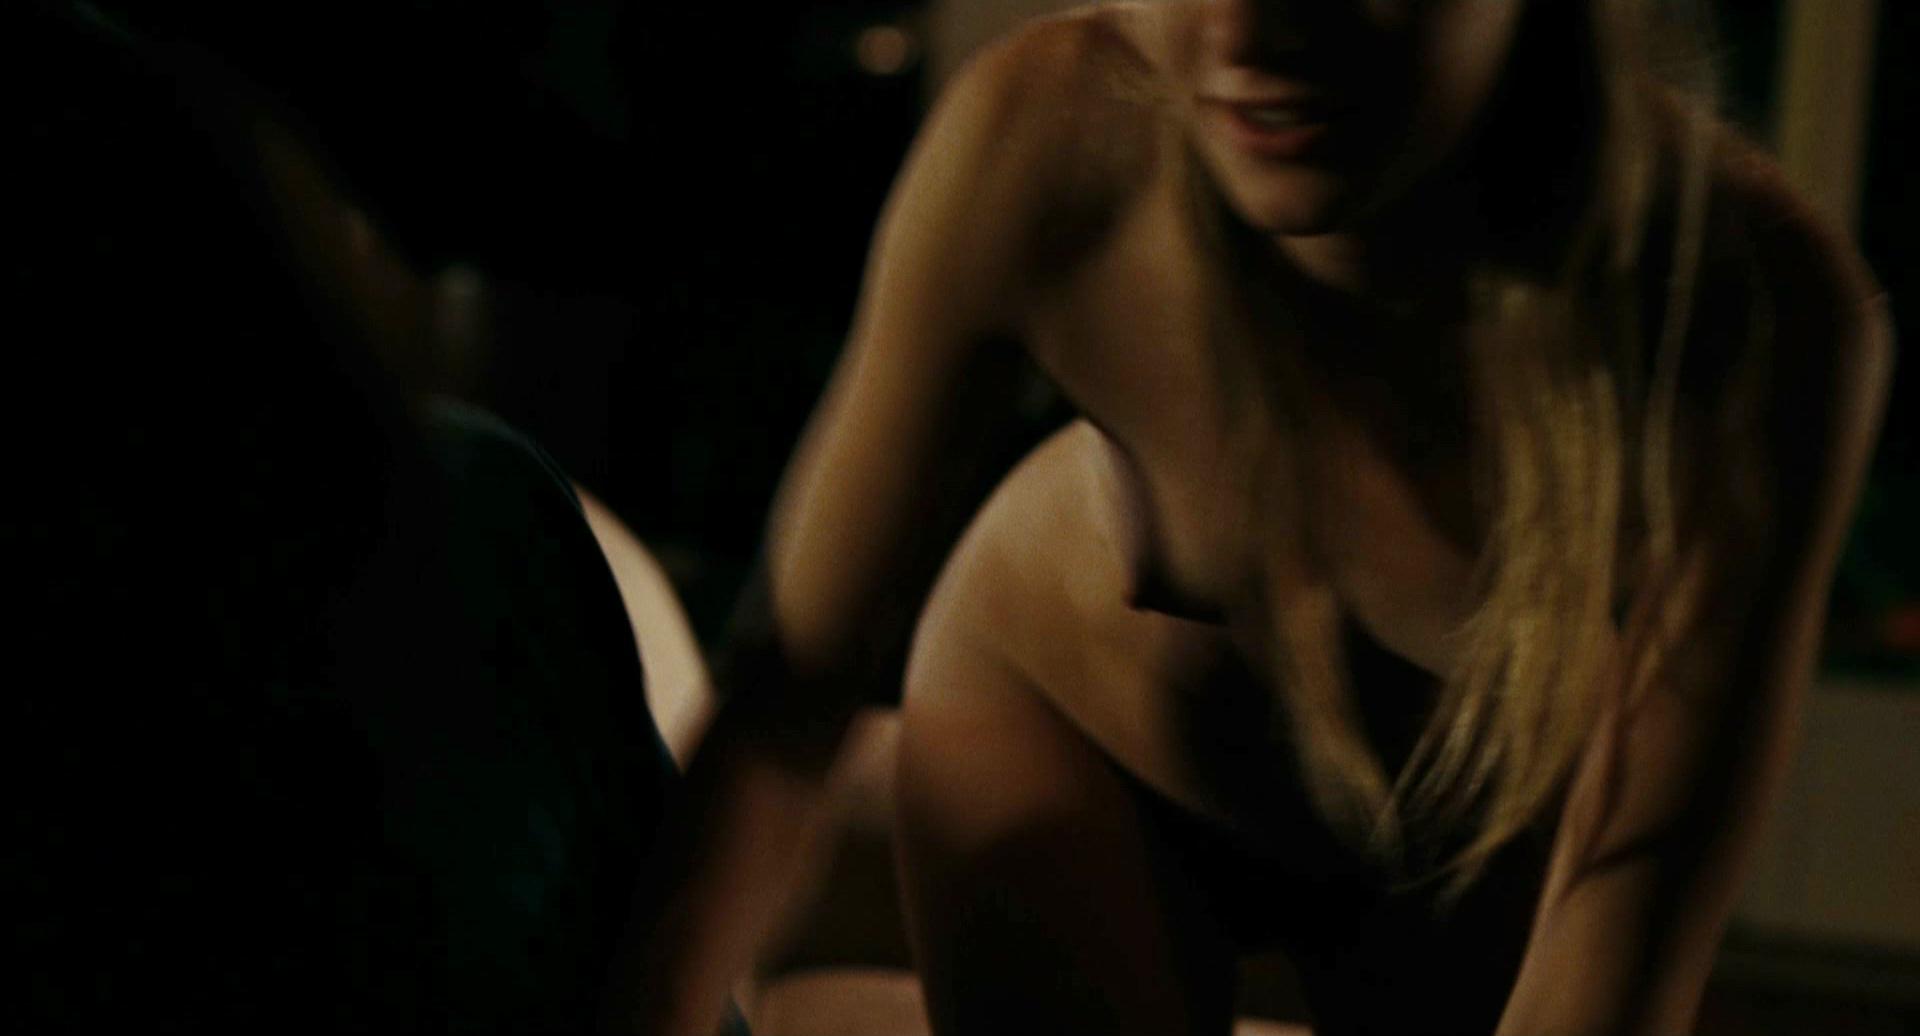 Josefin Ljungman nude sex scene - Himlen ar oskyldigt bla (2010) - PornHex